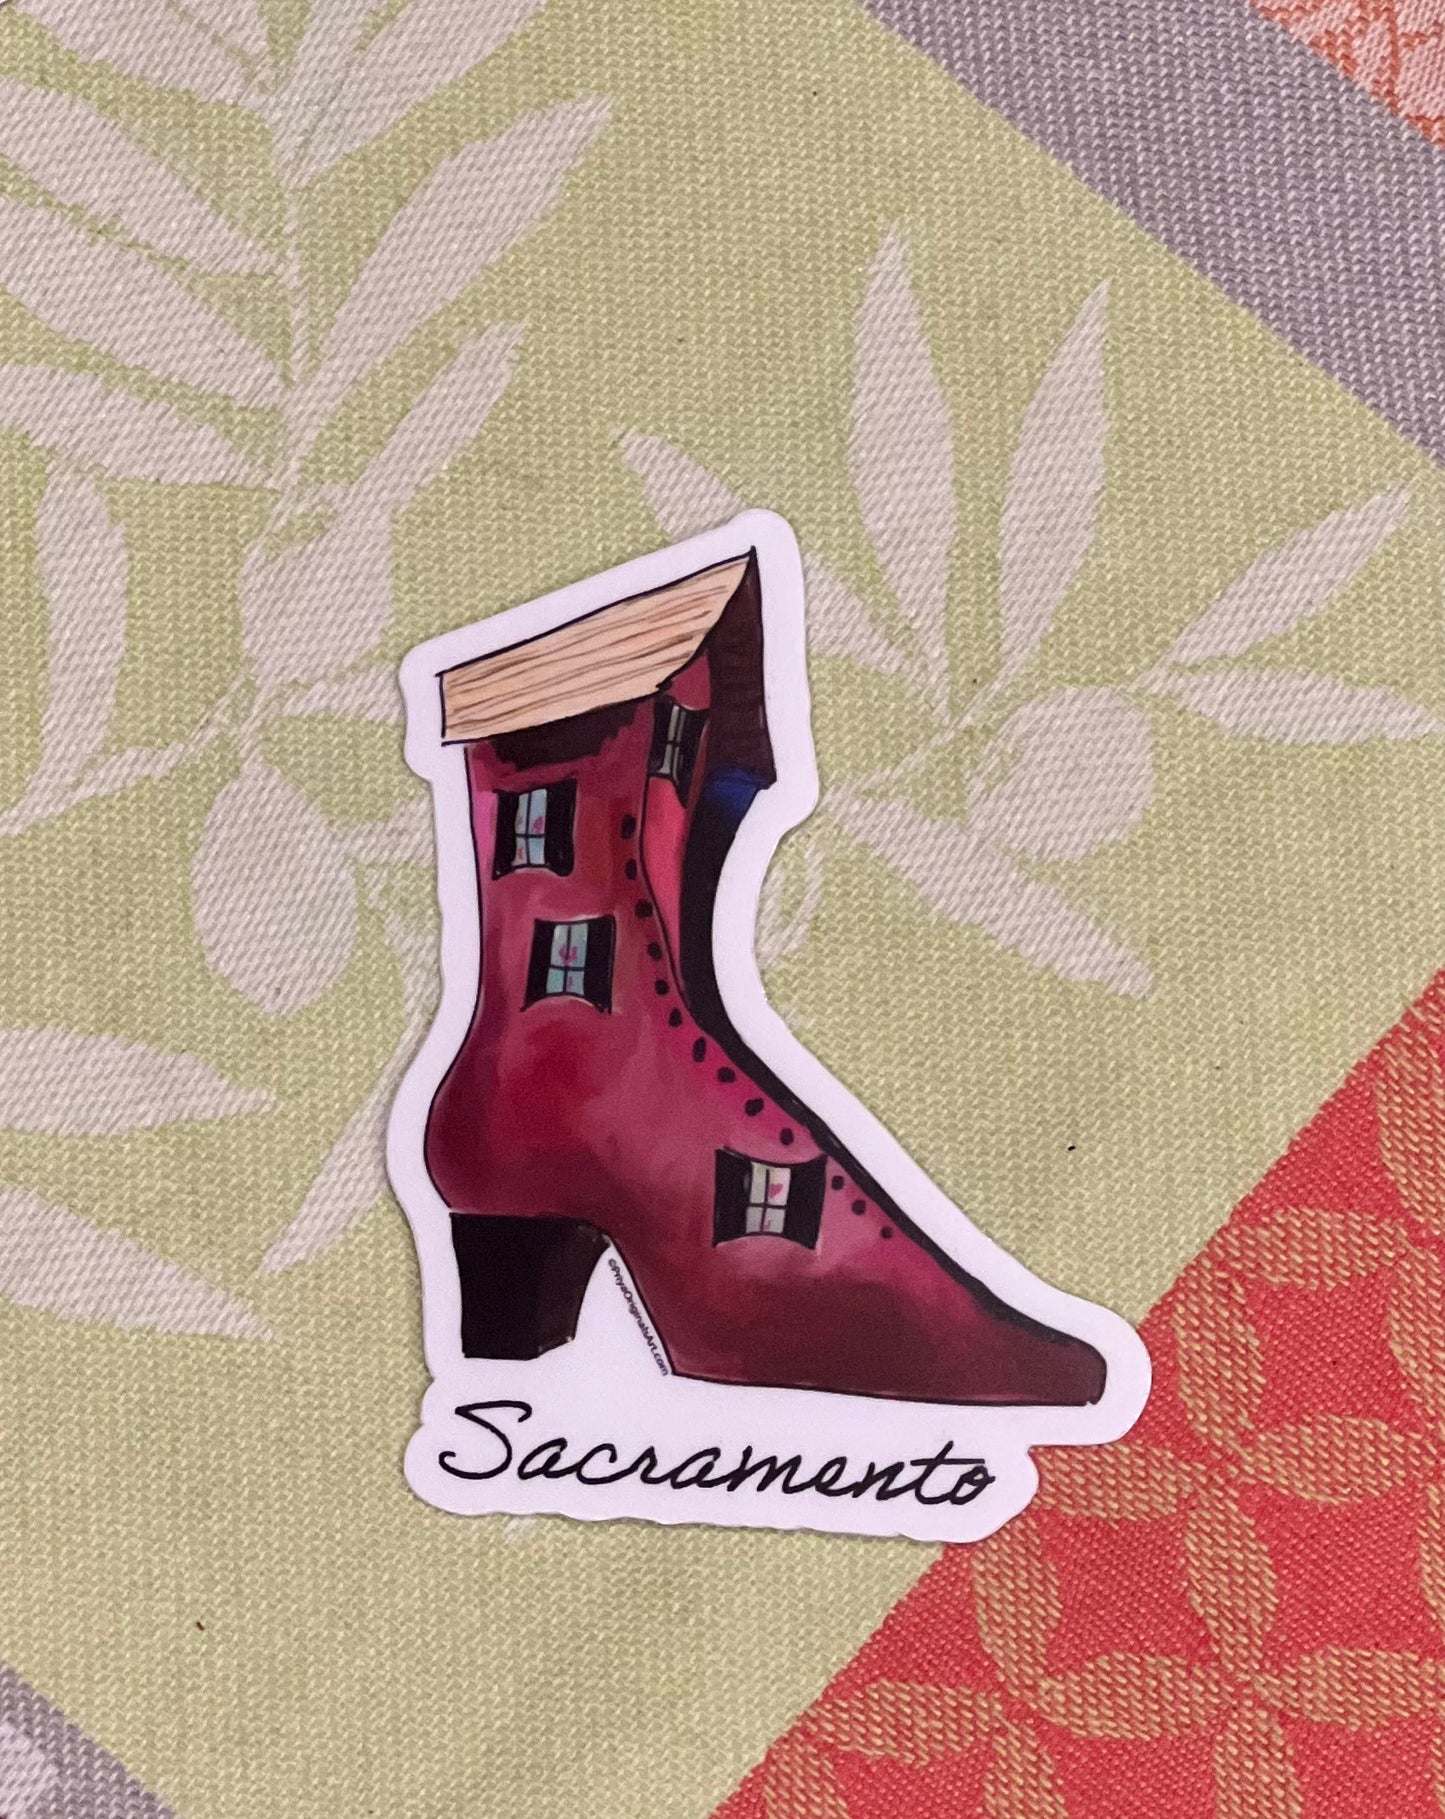 Fairytale Town - Sacramento sticker